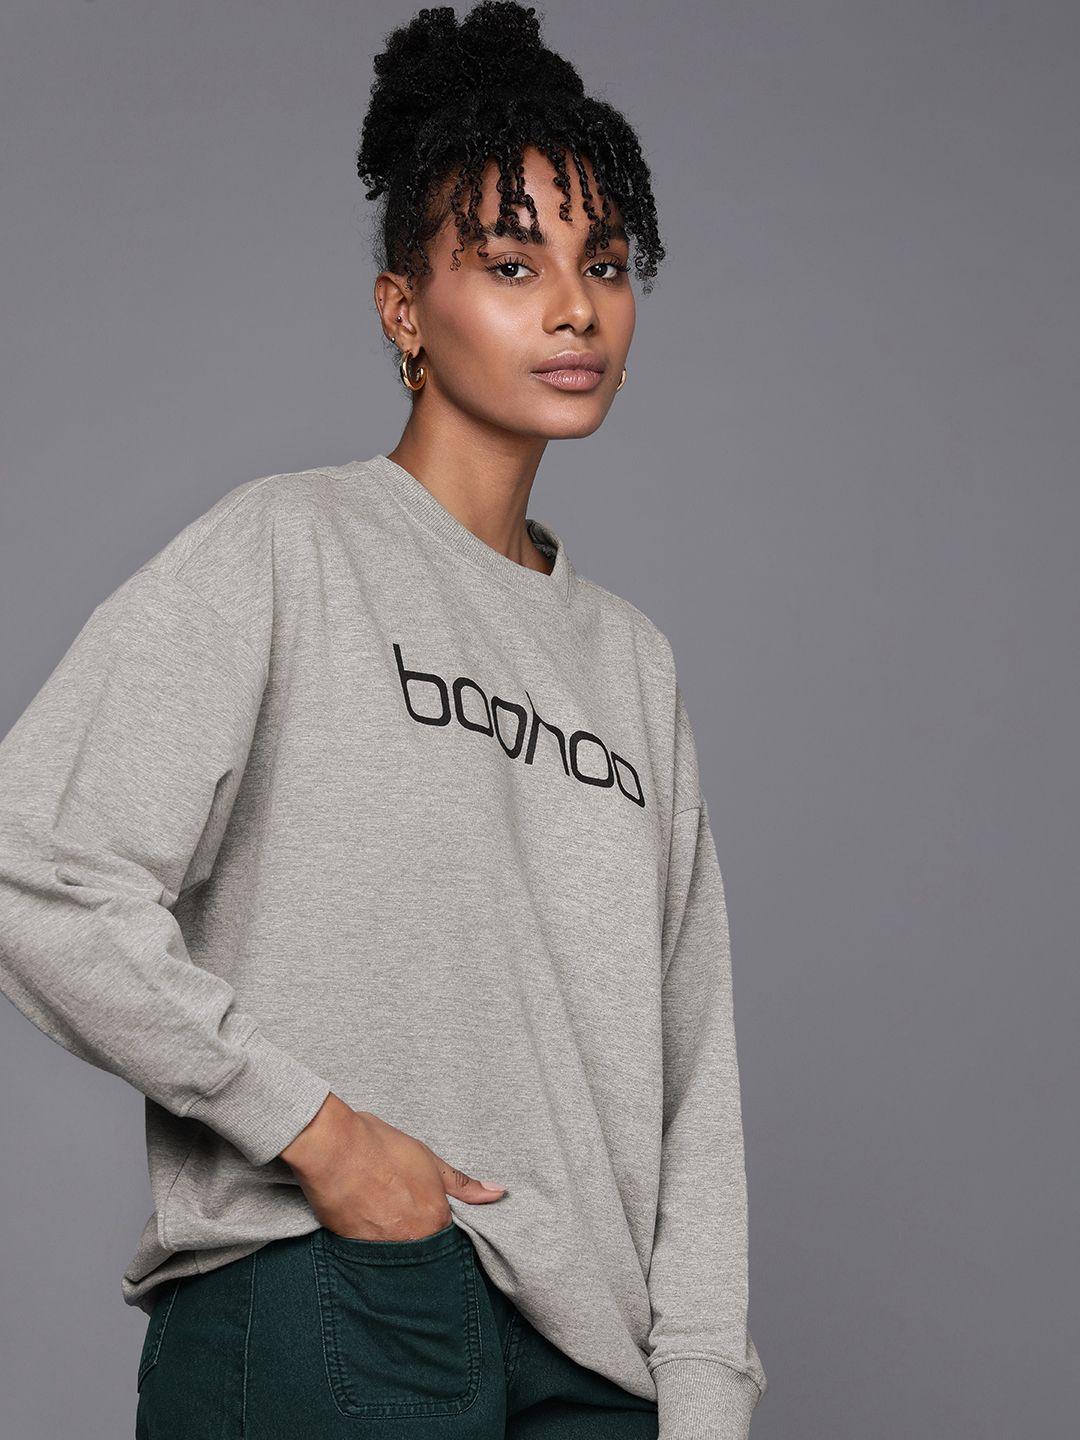 boohoo brand logo printed long sleeves sweatshirt